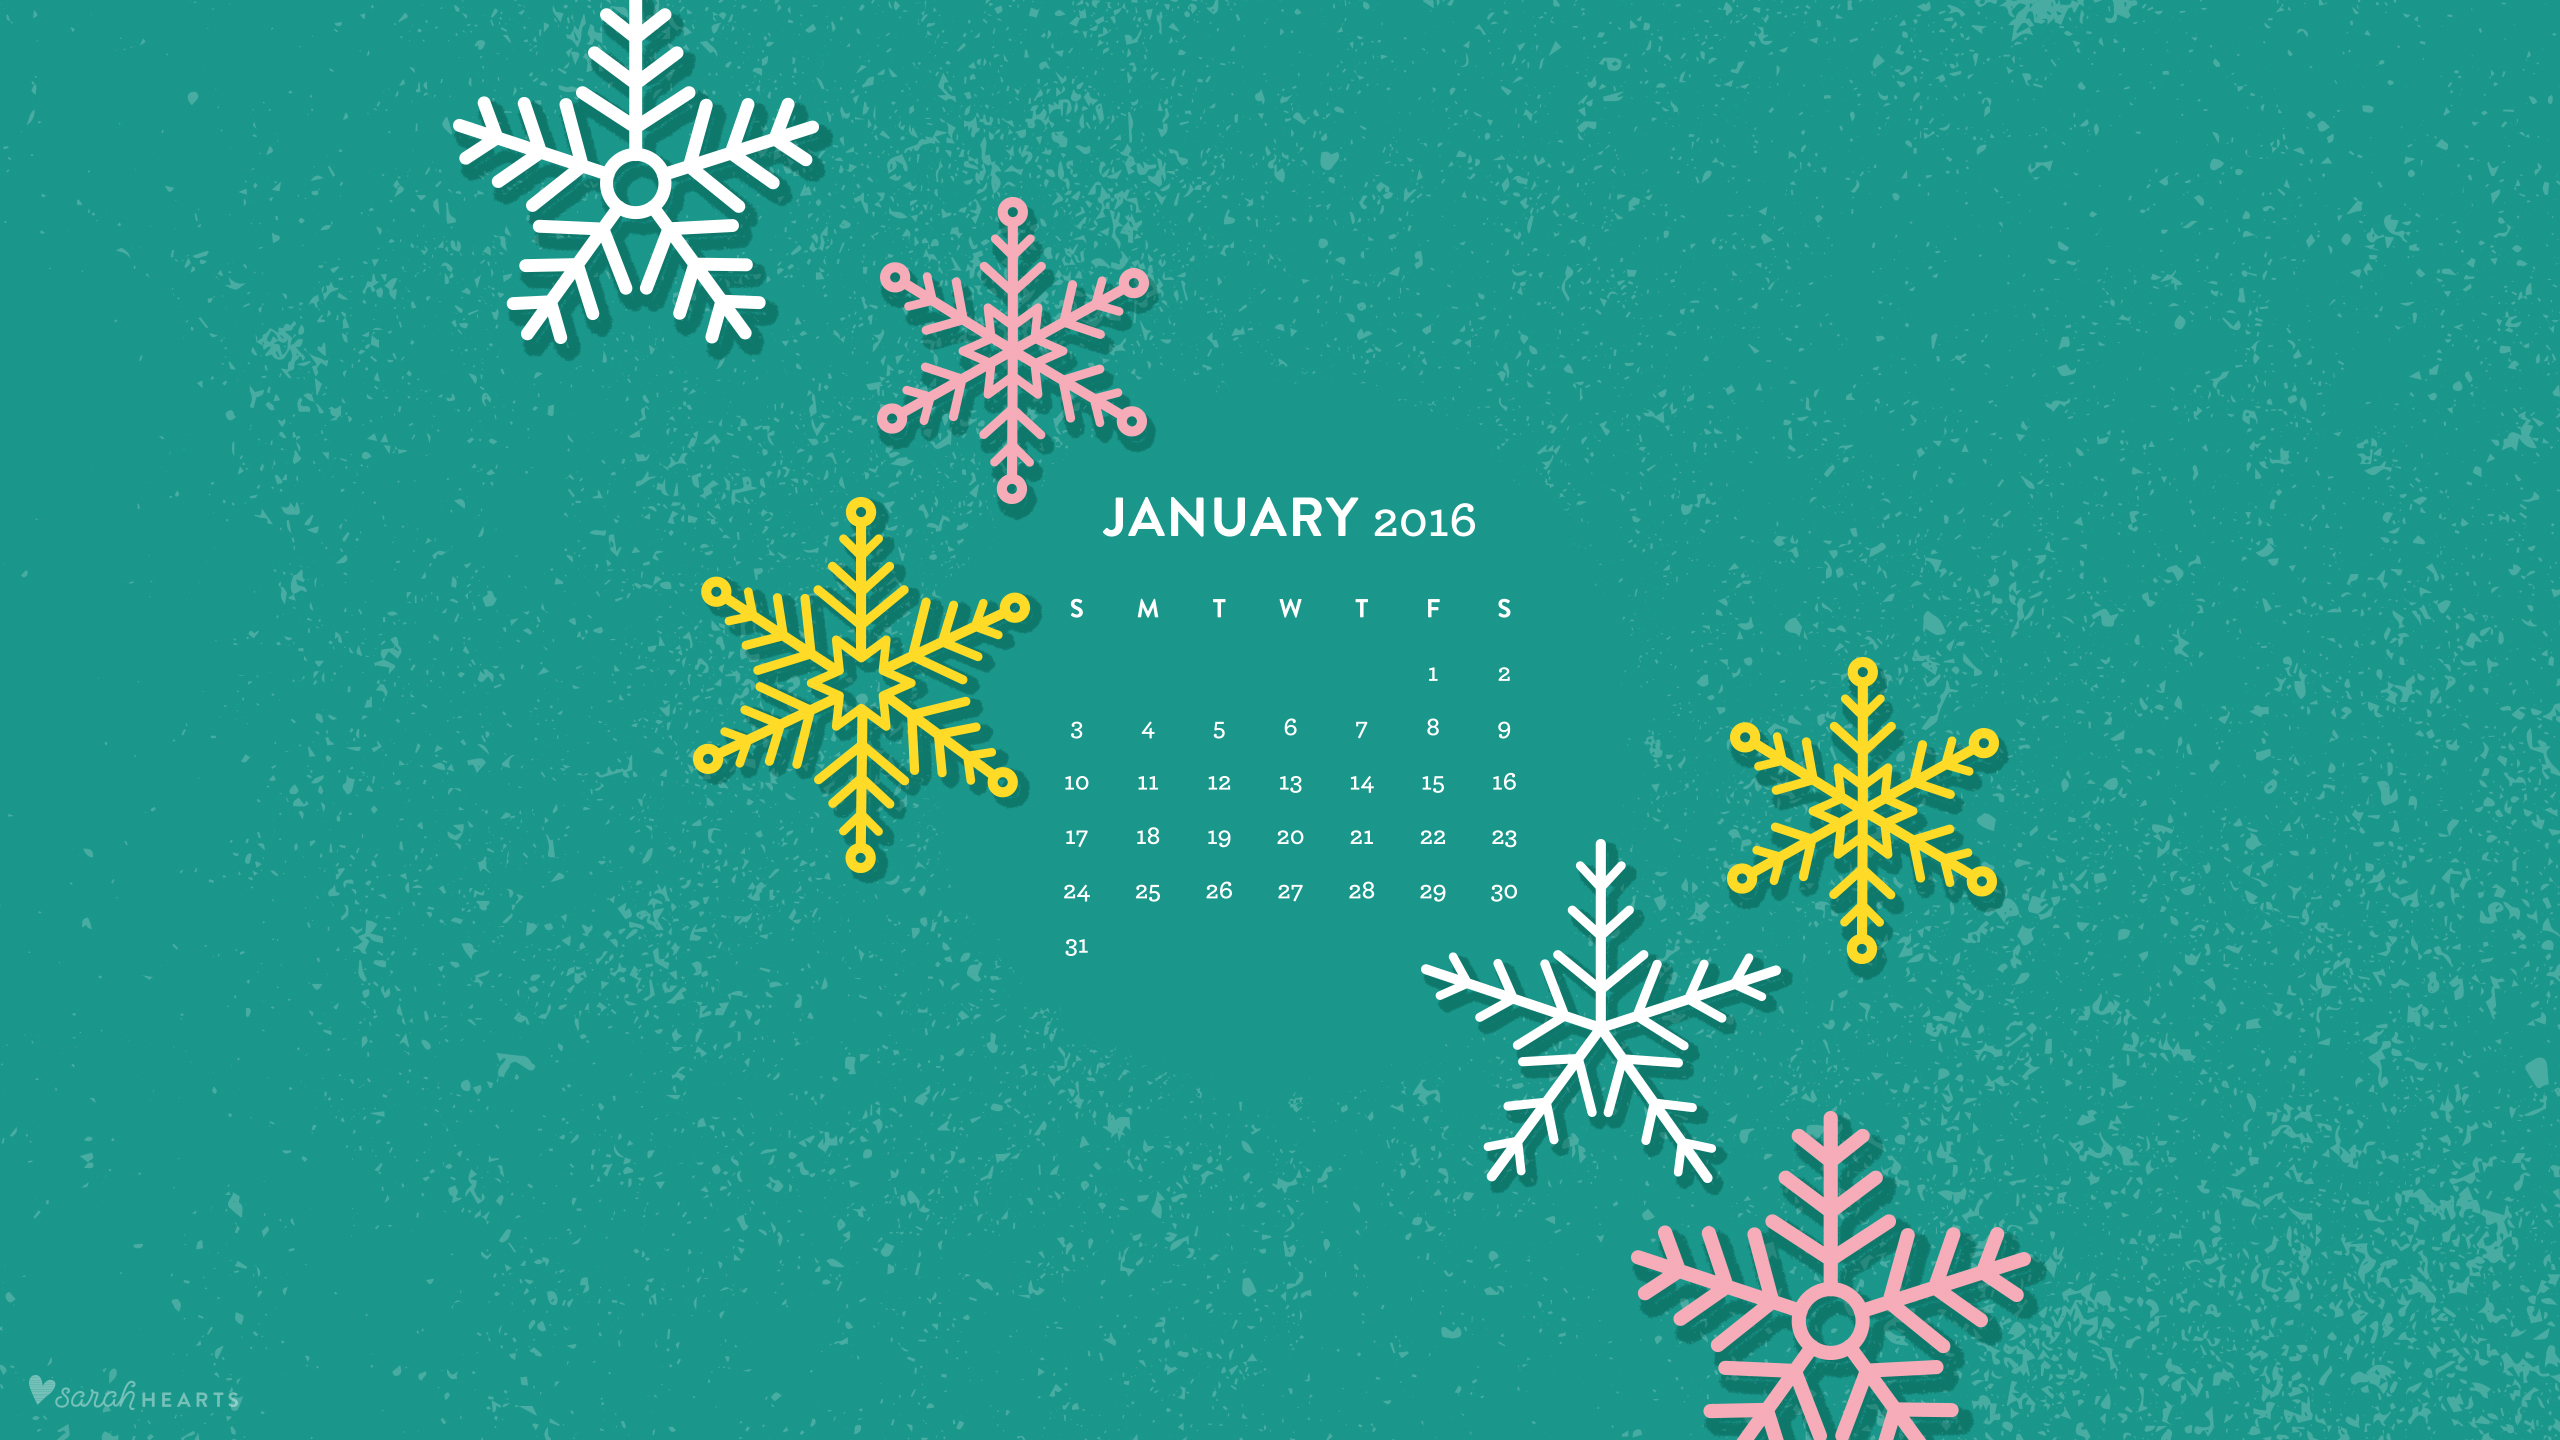 January 2016 Calendar Wallpaper   Sarah Hearts 2560x1440